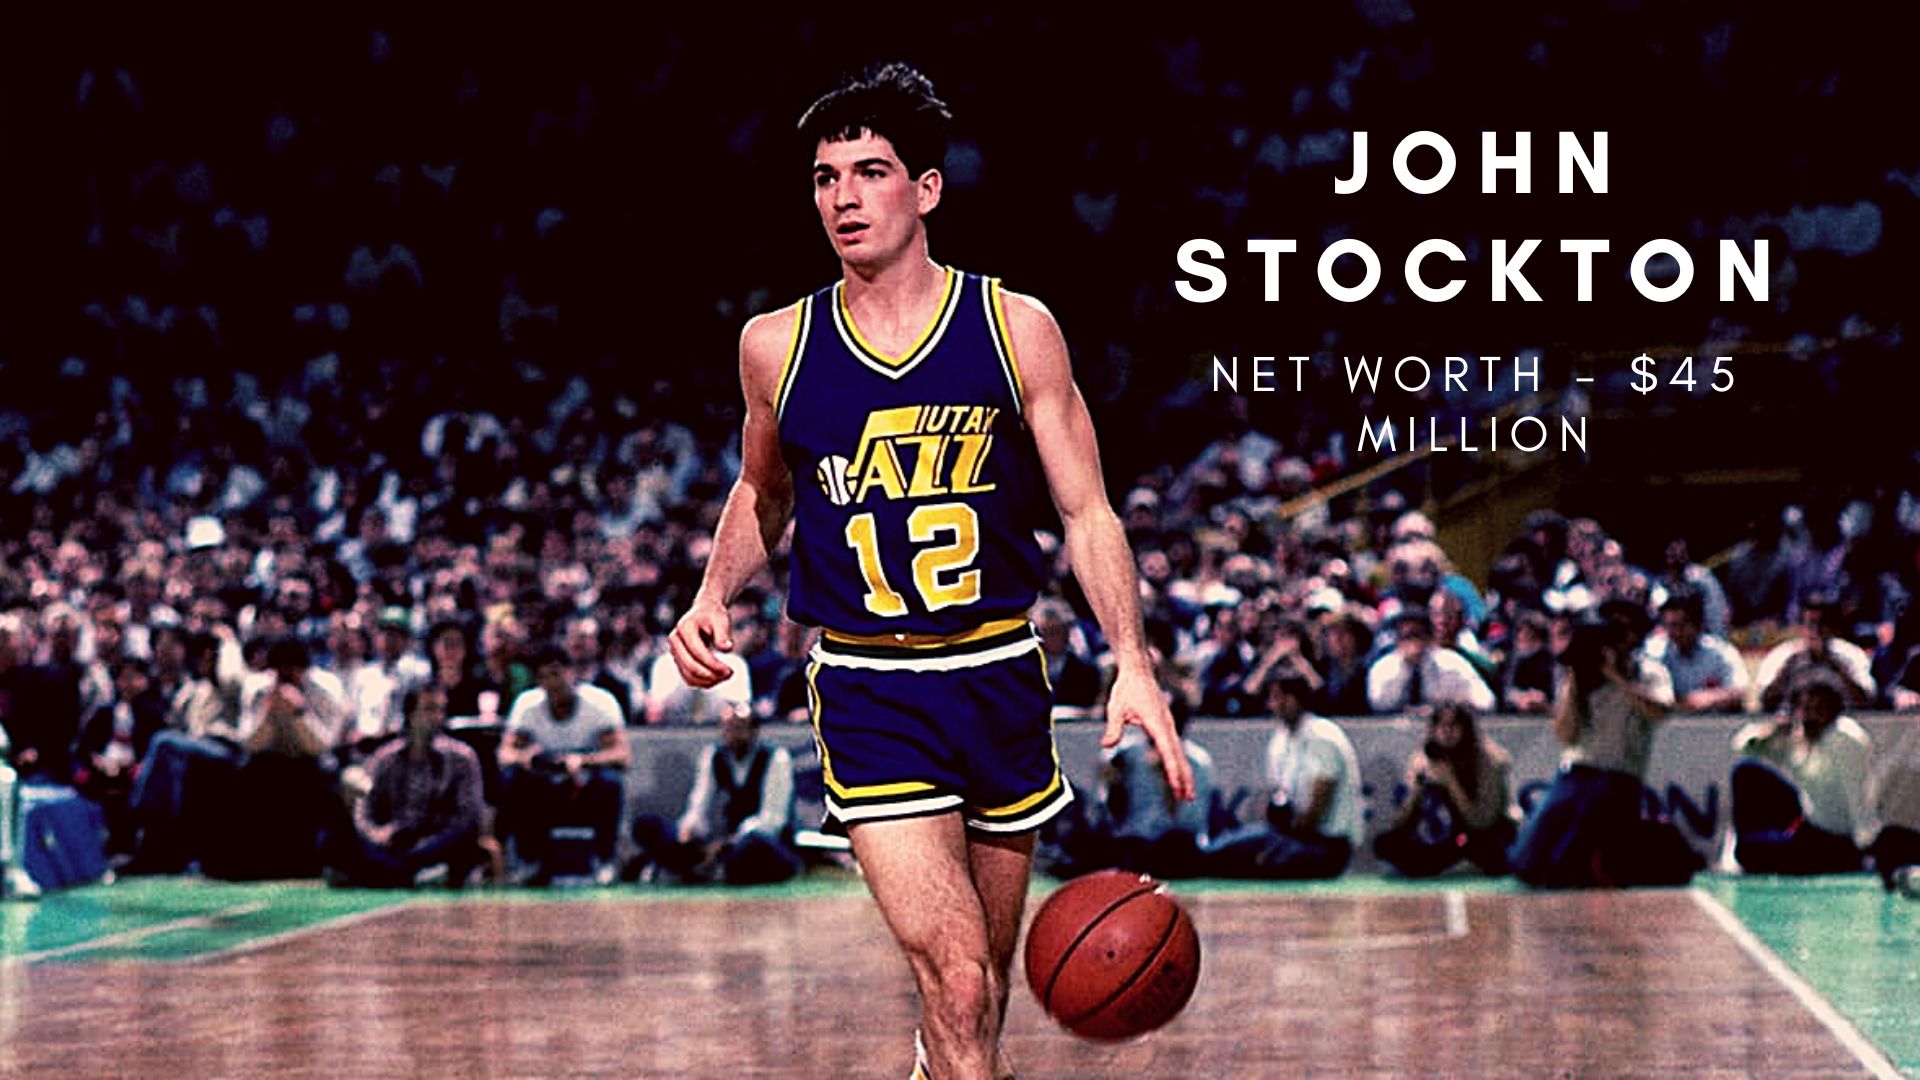 John Stockton net worth